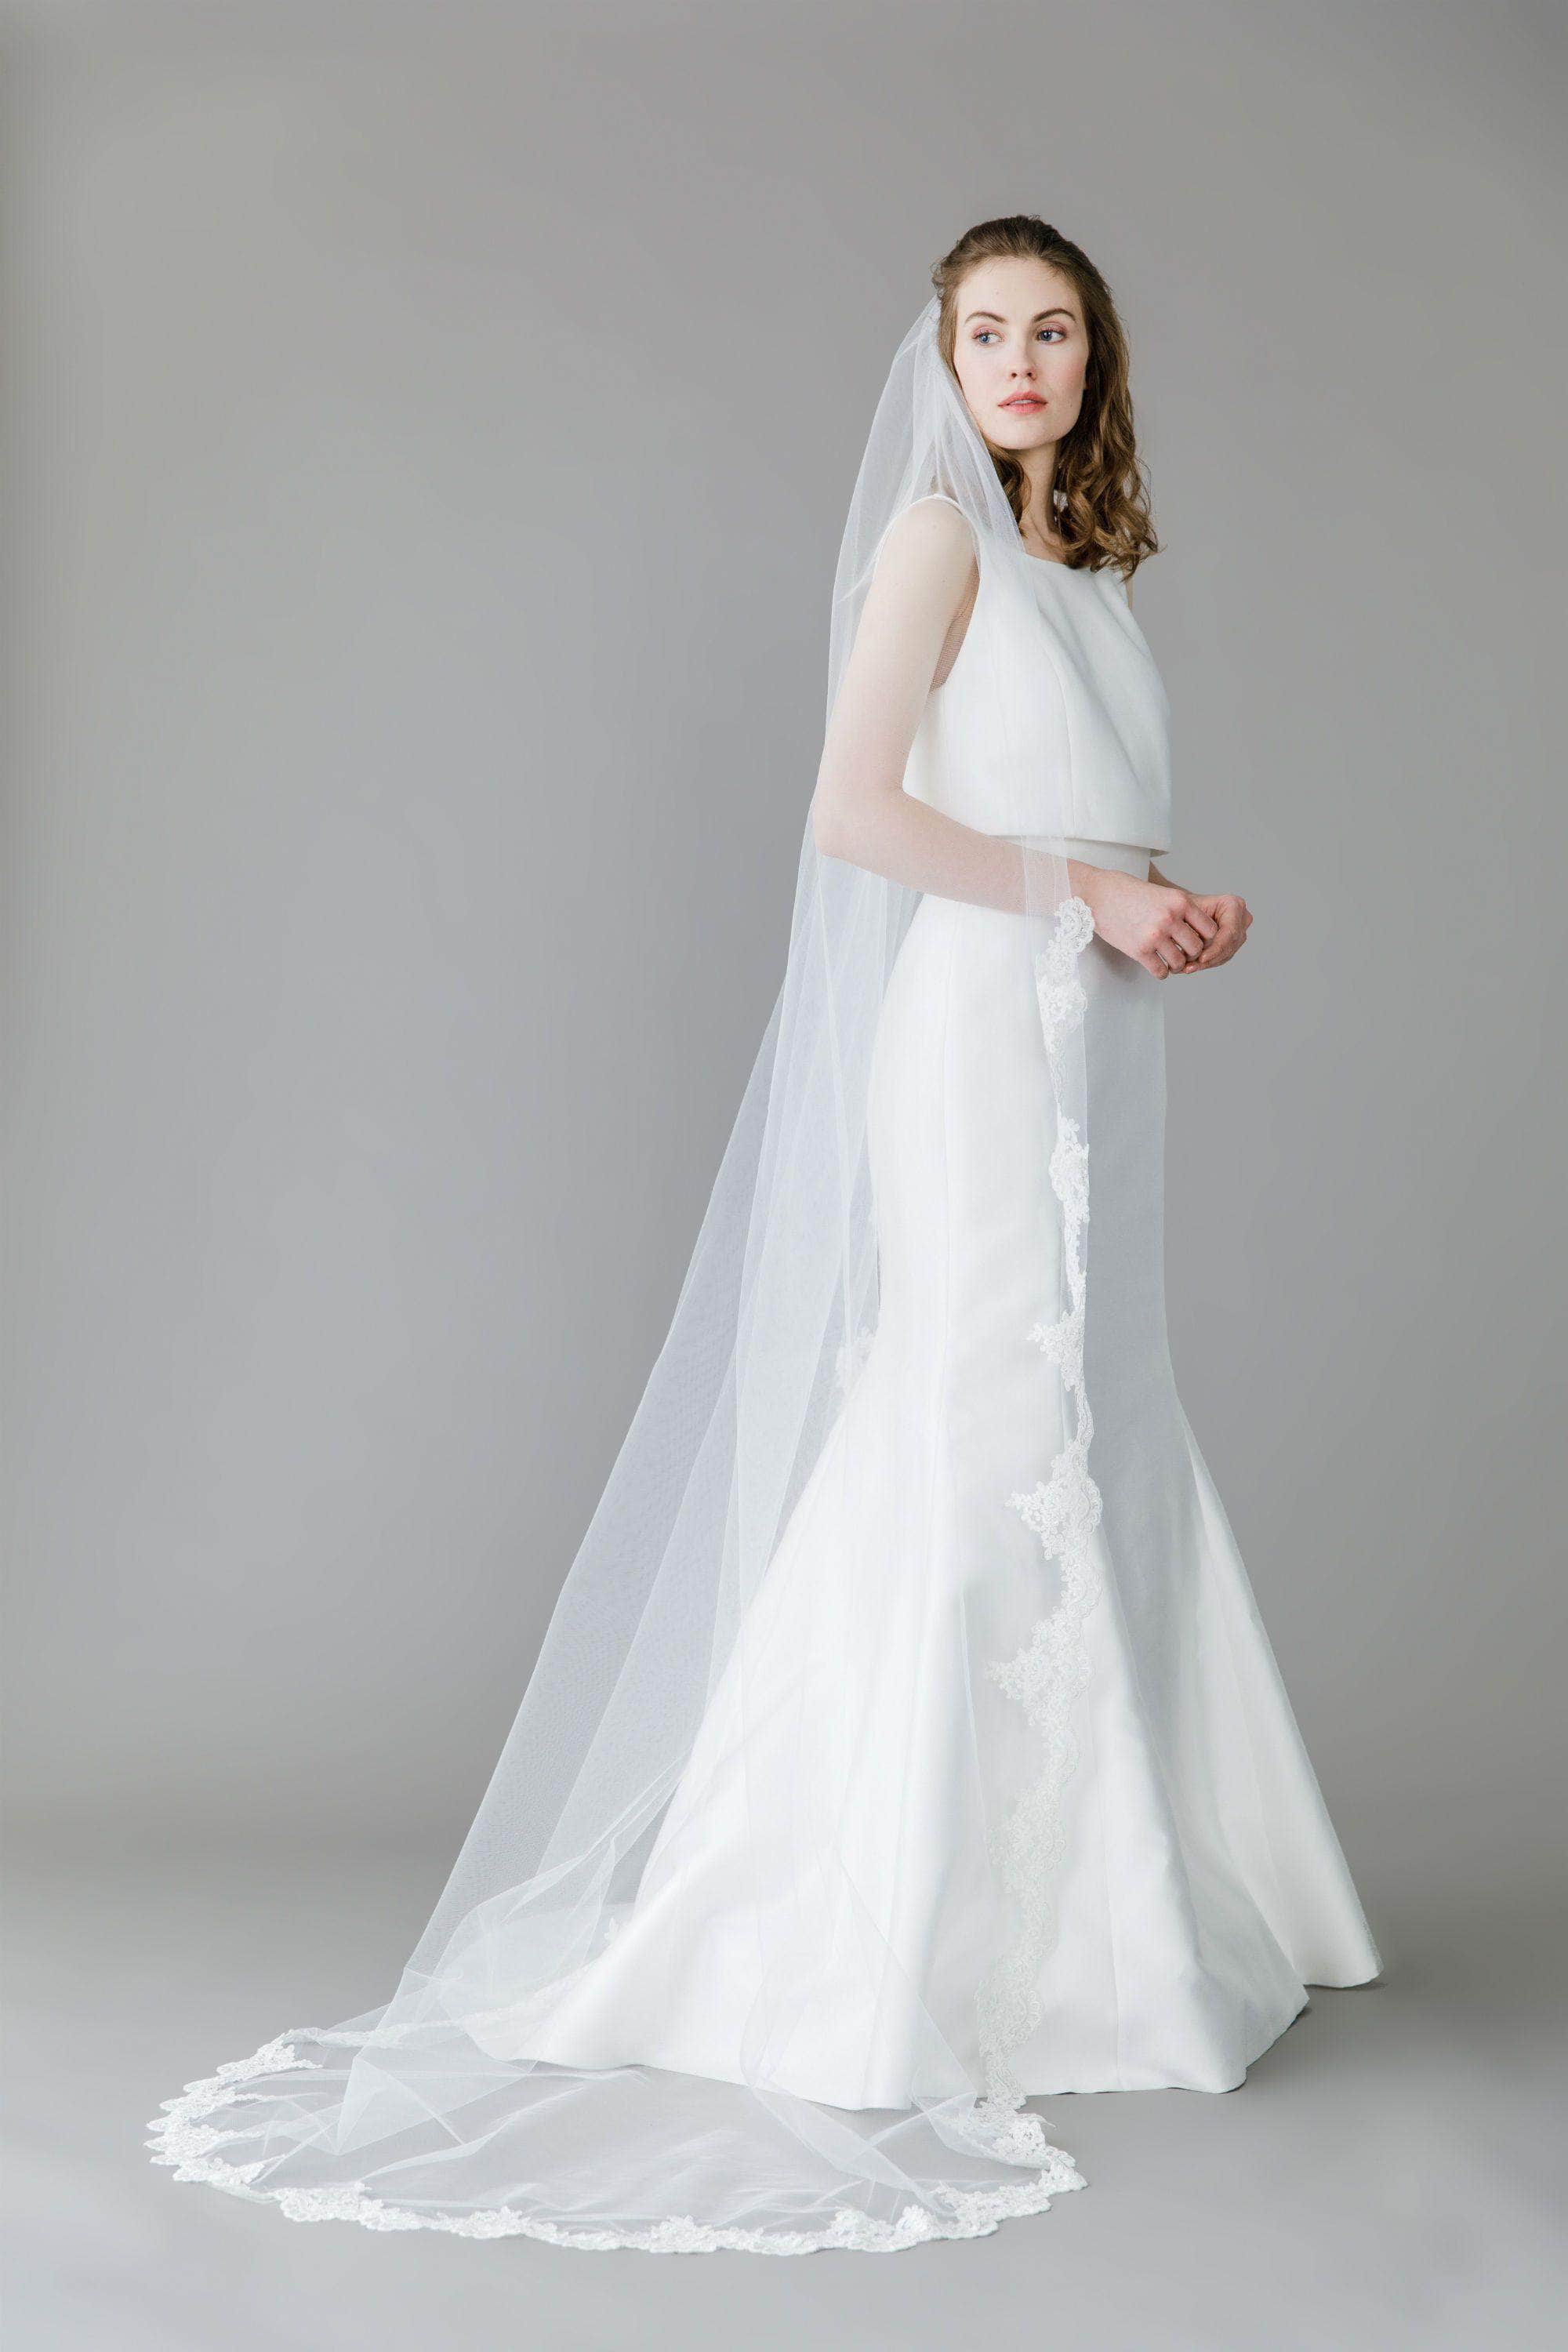 Wedding Veil Semi edged wedding veil with lace starting around wrists - 'Emma'